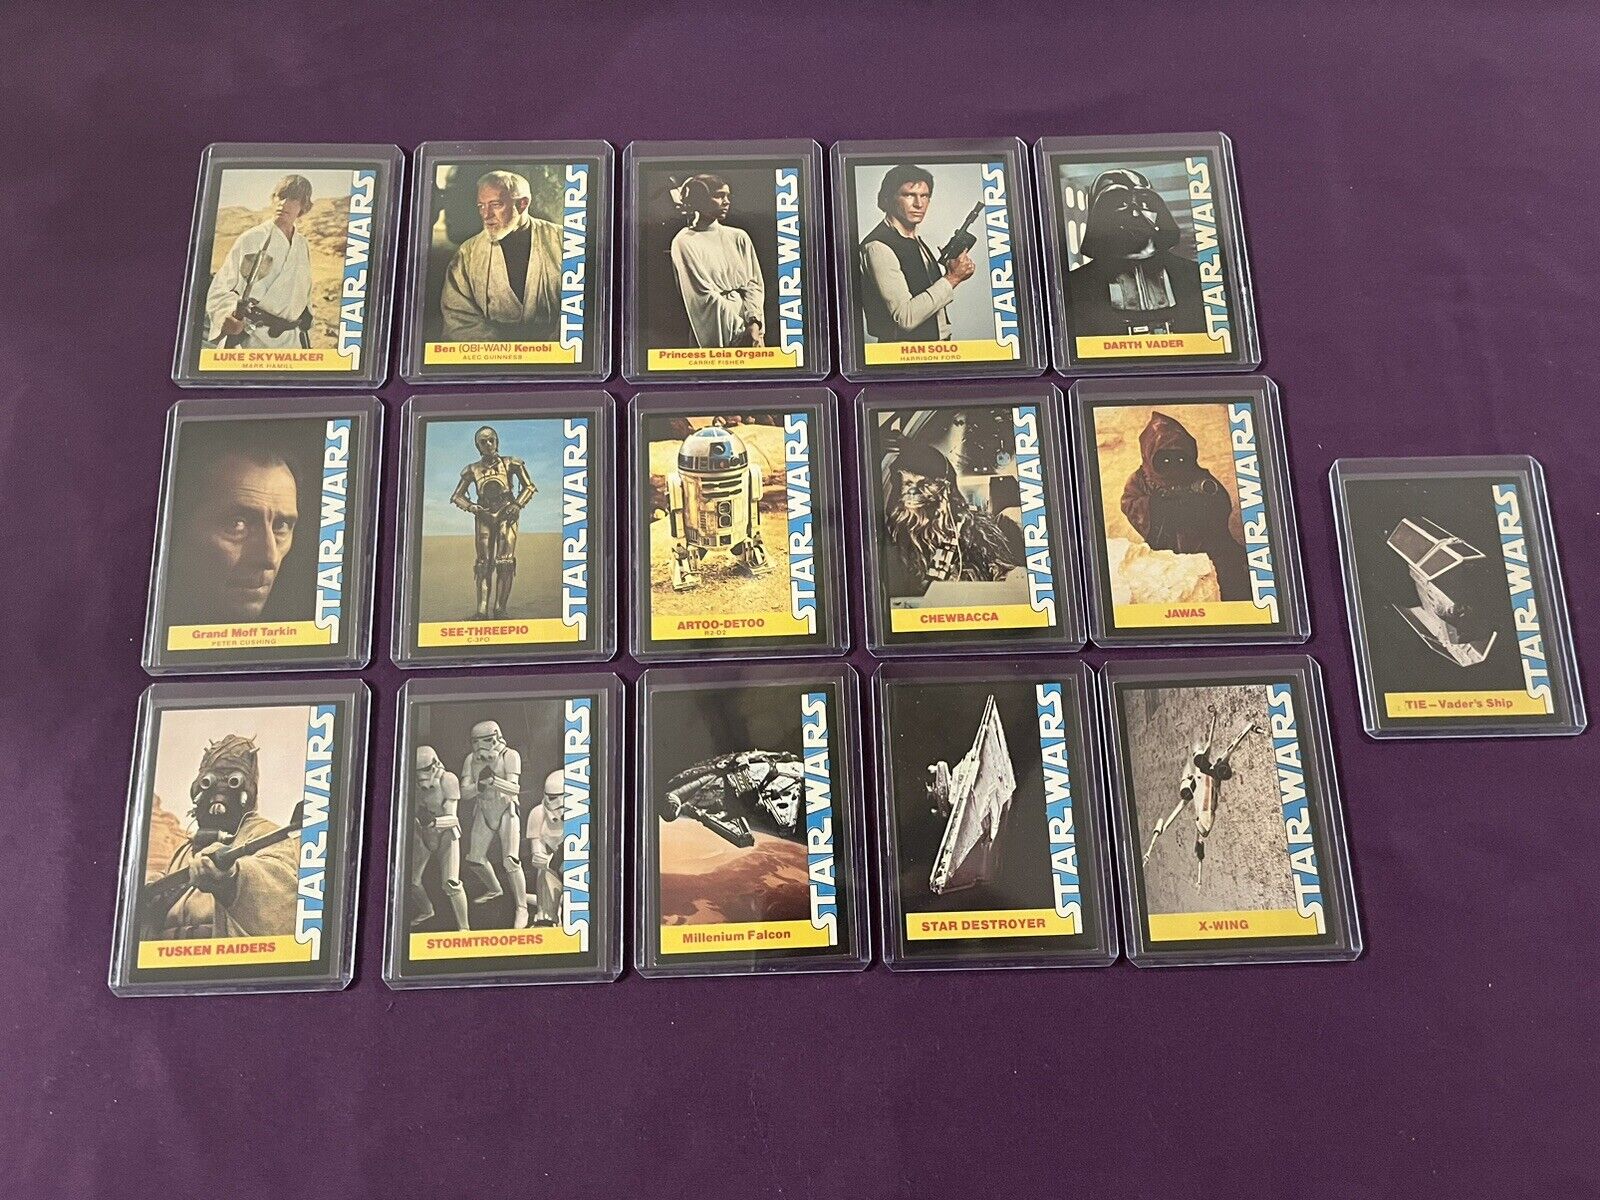 1977 STAR WARS WONDER BREAD COMPLETE SET OF 16 CARDS - EX+